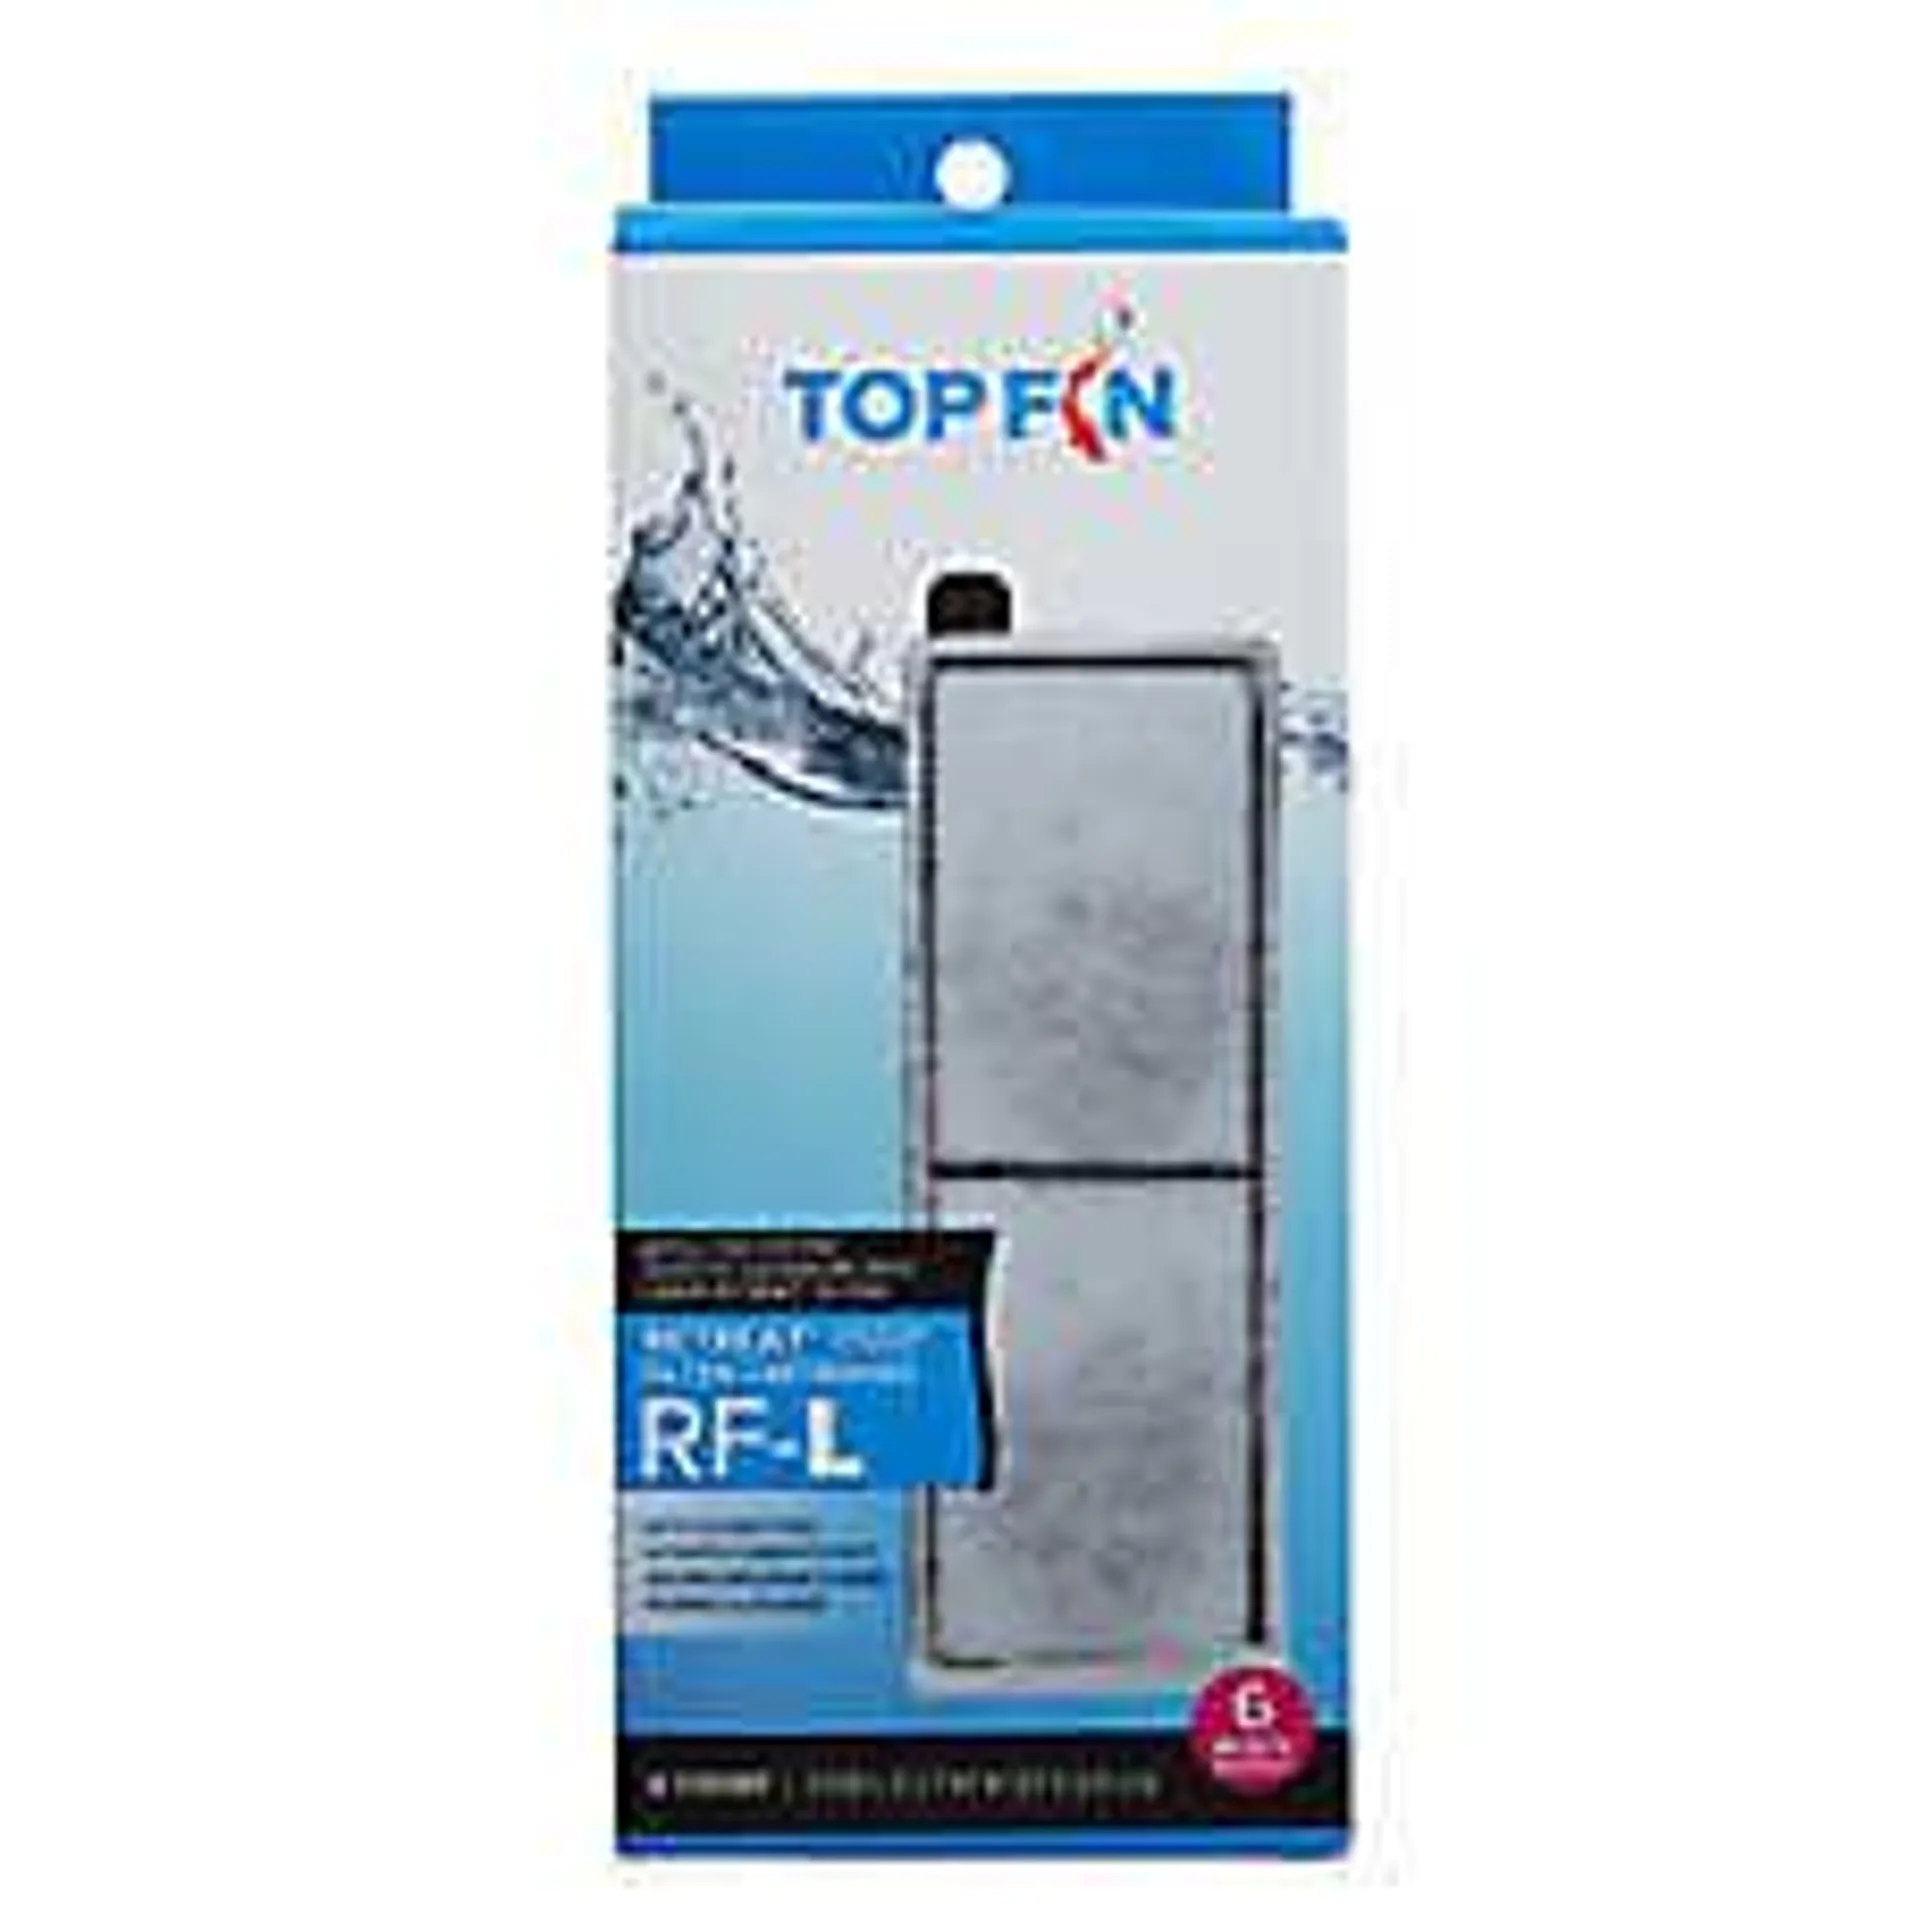 Top Fin ® Retreat ™ RF-L Filter Cartridges